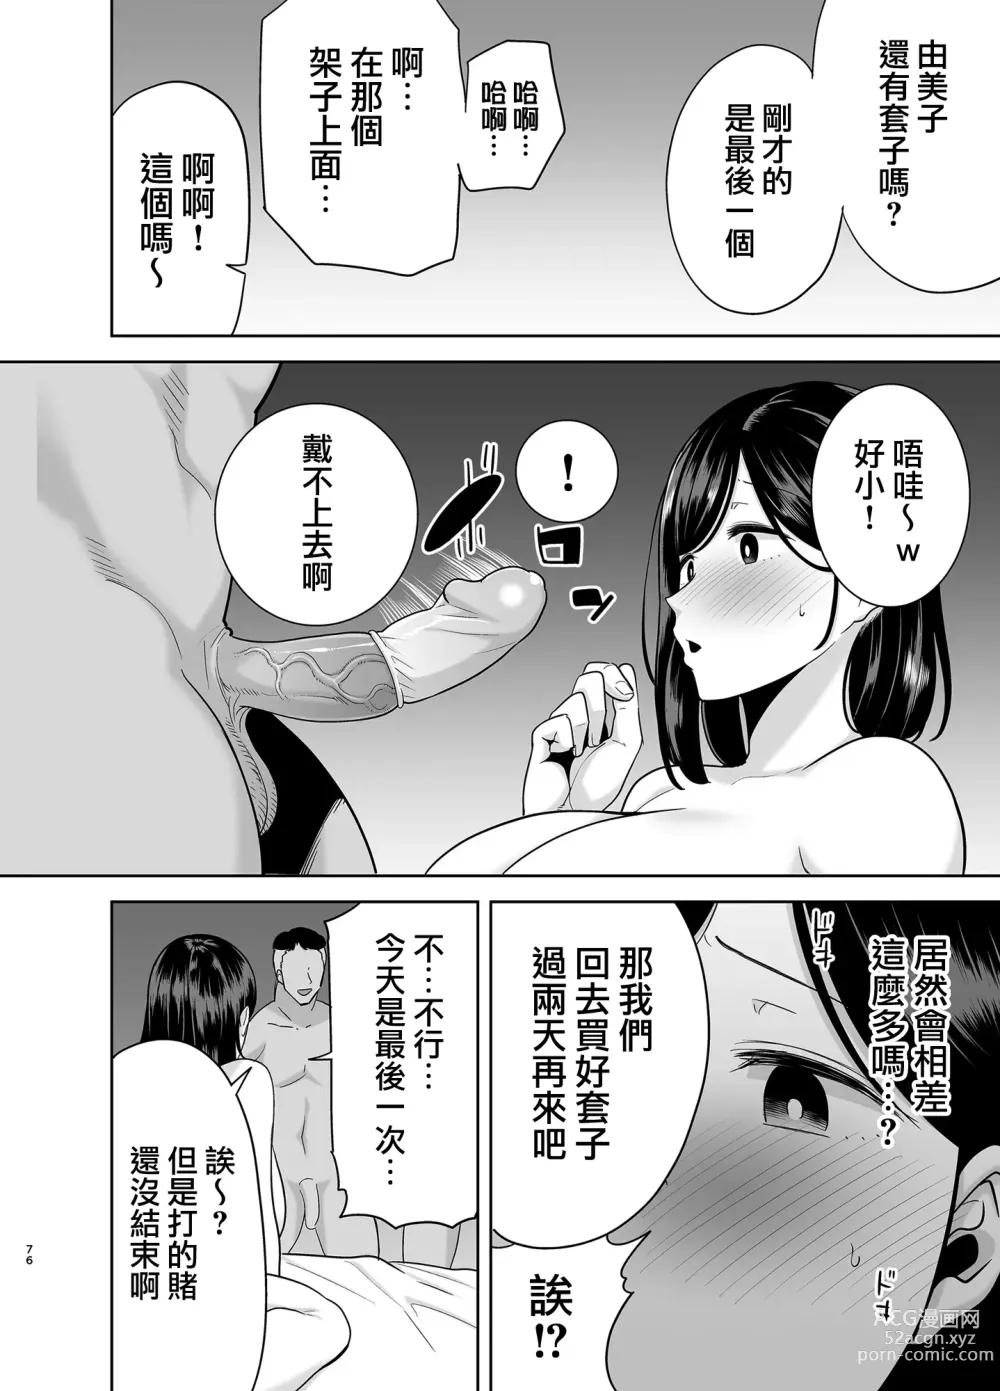 Page 75 of doujinshi sdasd